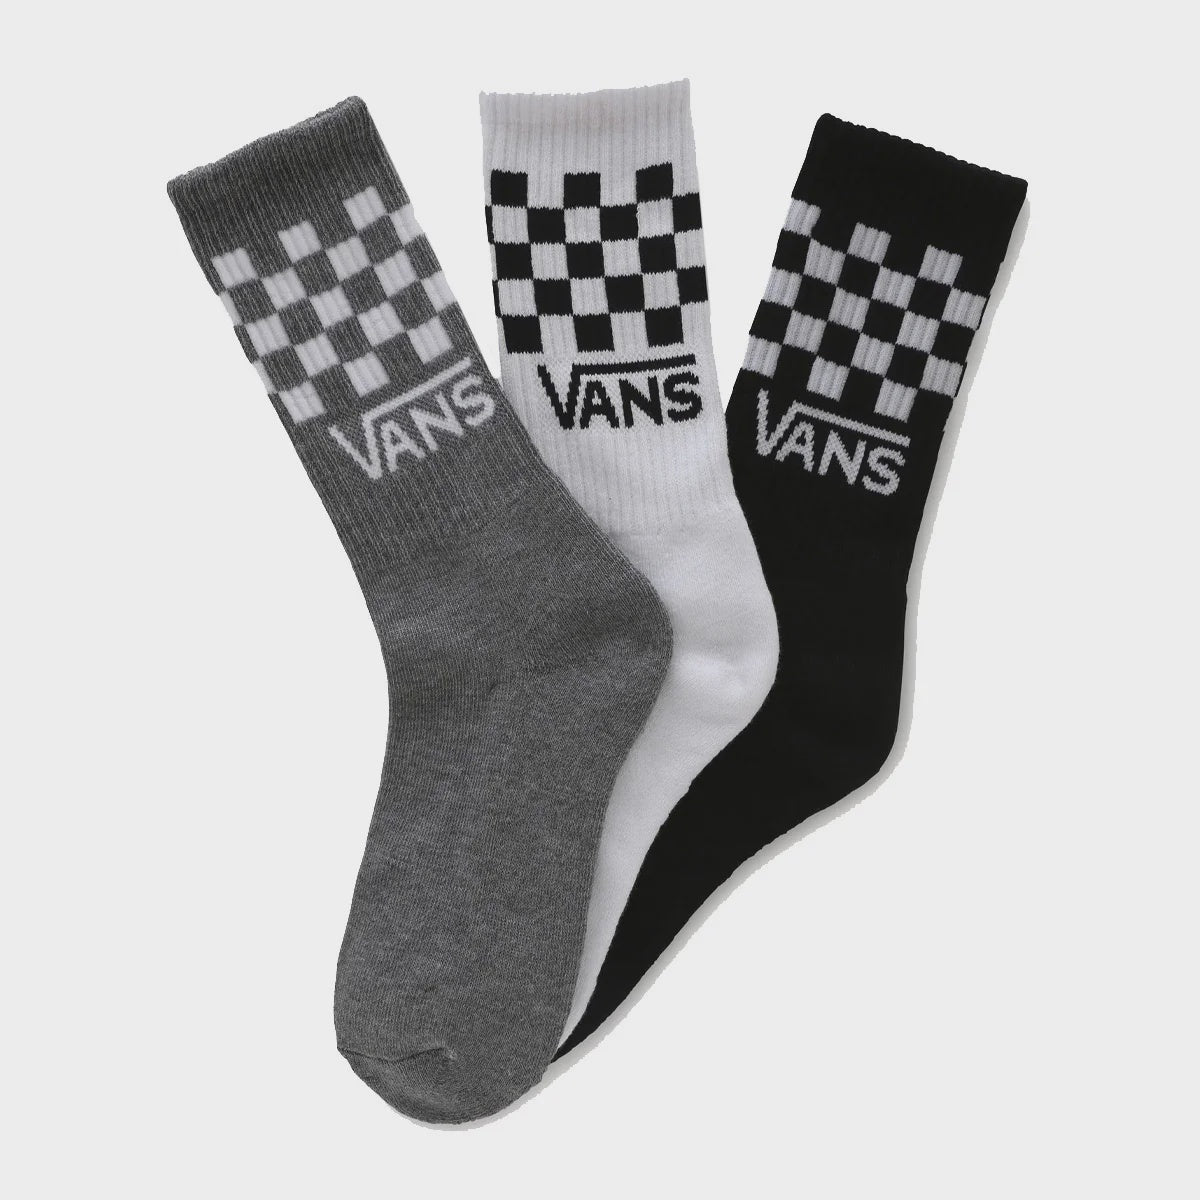 Vans Classic Check Crew Sock BLACK / WHITE / GREY